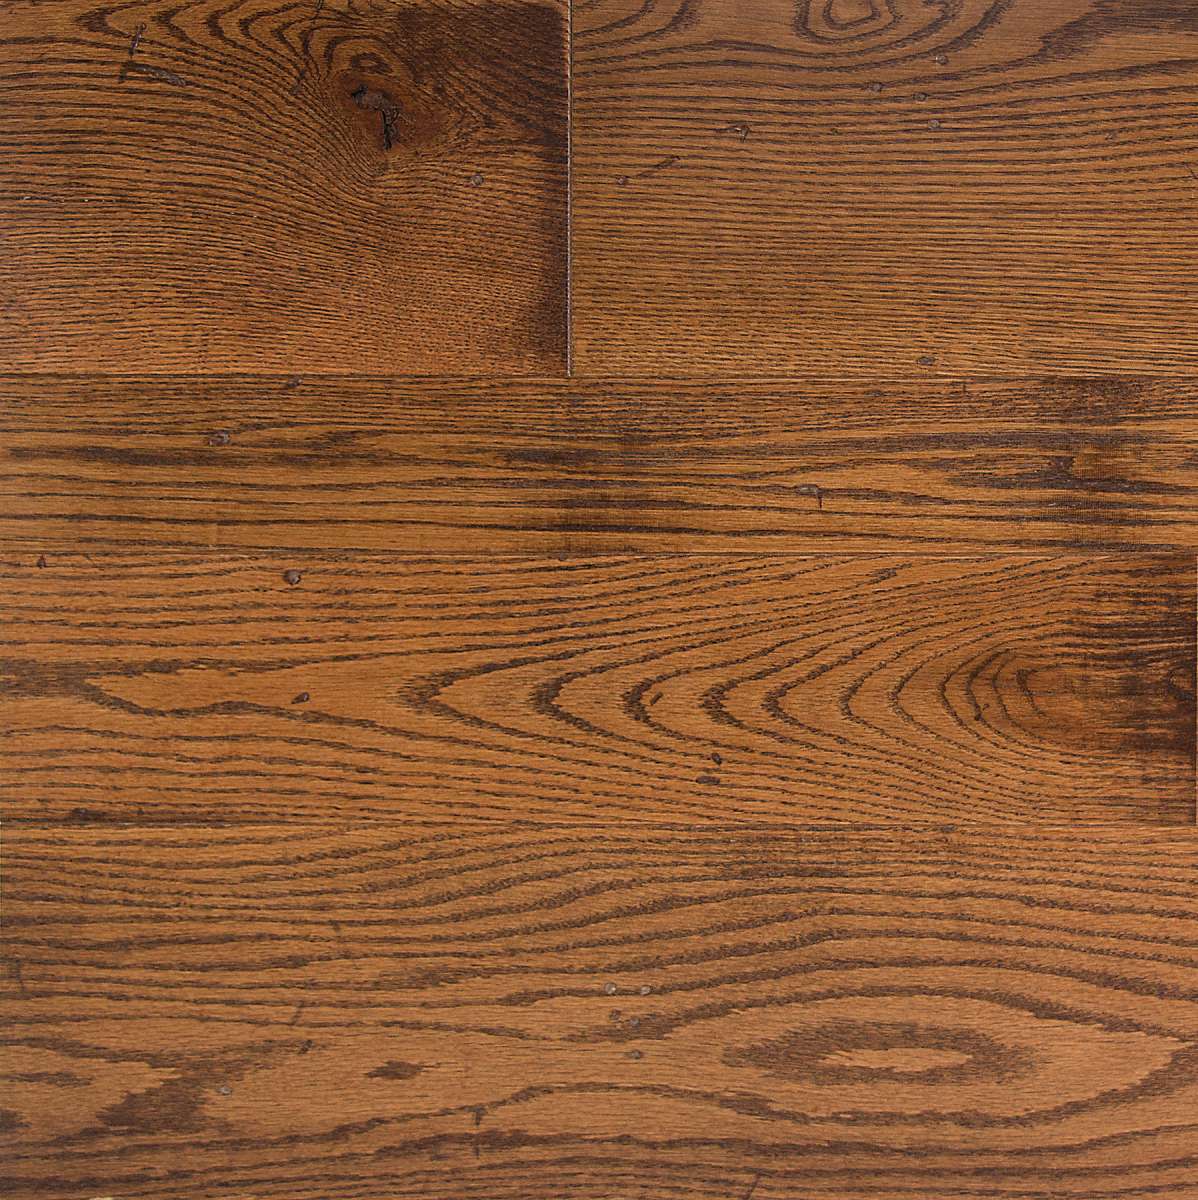 Somerset Hardwood Flooring, Hickory Spice Hardwood Floor